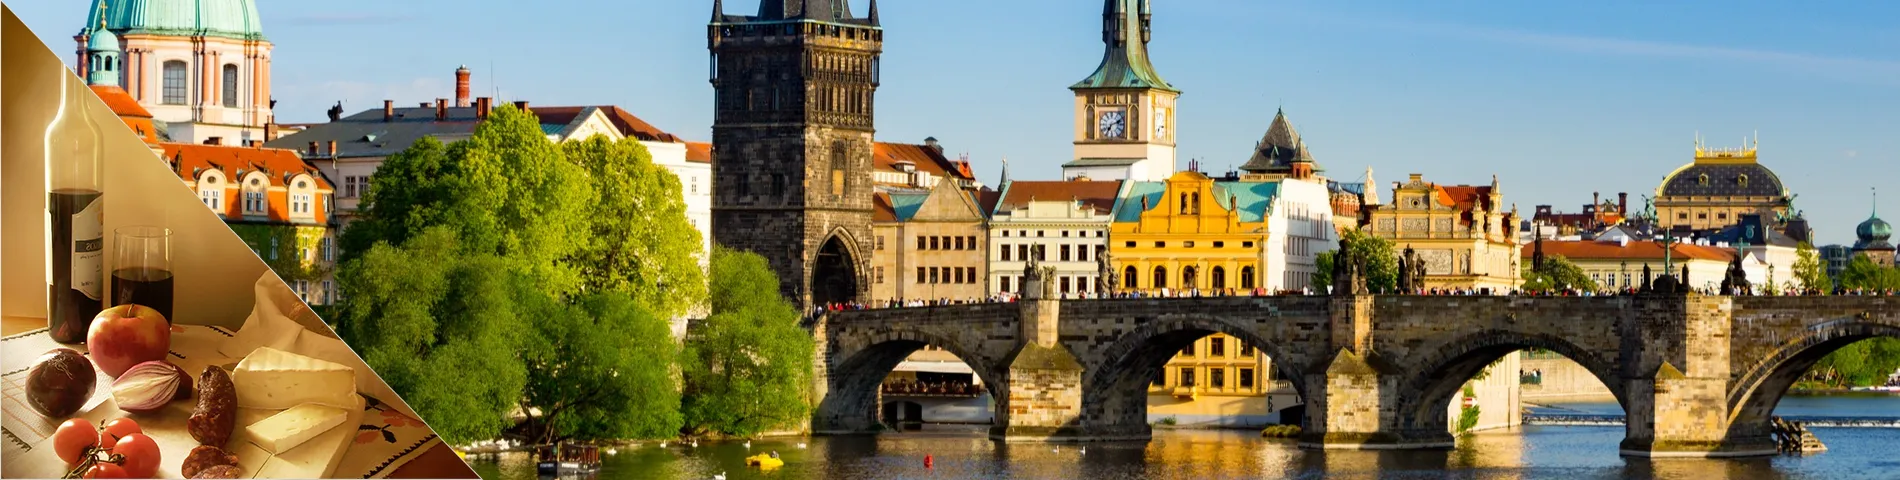 Praha - Tsekki & kulttuuri